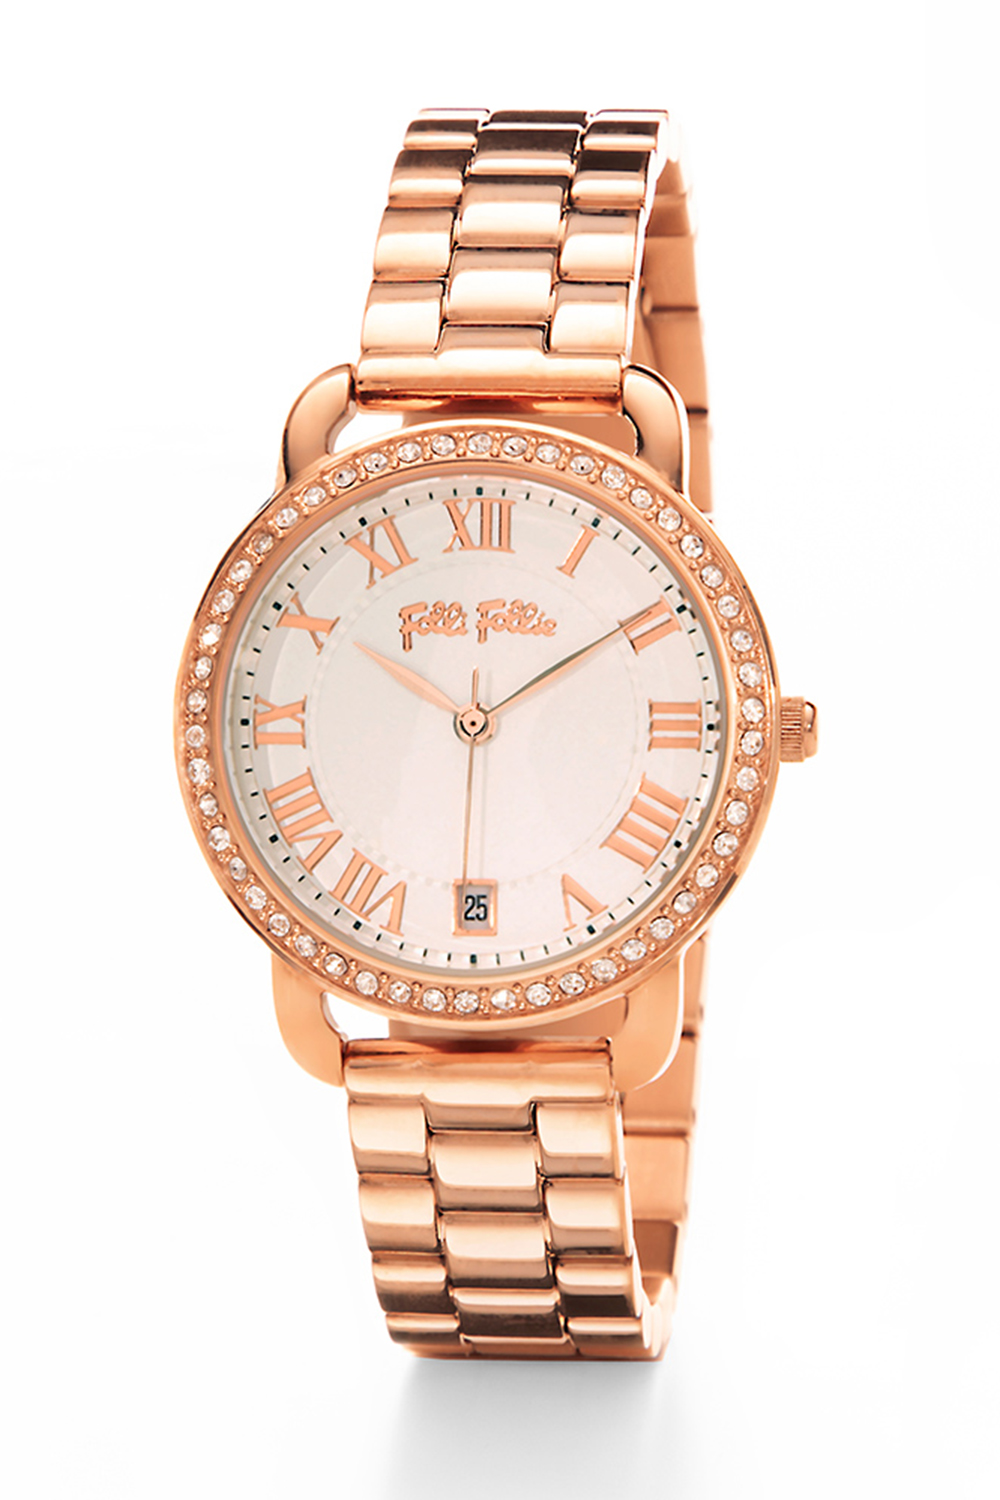 FOLLI FOLLIE – Γυναικείο ρολόι με μπρασελέ από ατσάλι FOLLI FOLLIE PERFECT MATCH ροζ χρυσό WF19B023BDW-XX